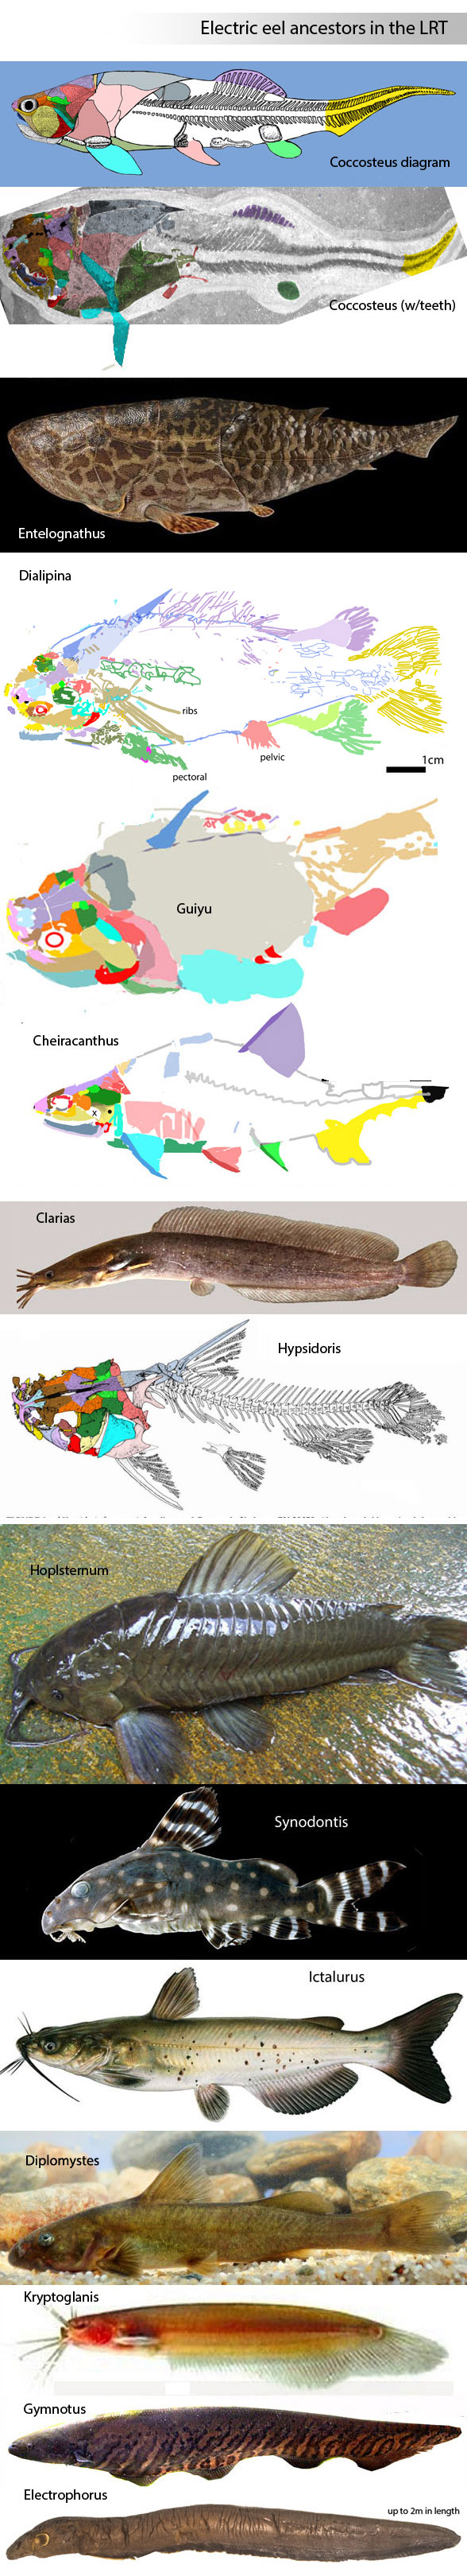 Electric eel ancestors Electrophorus to Coccosteus